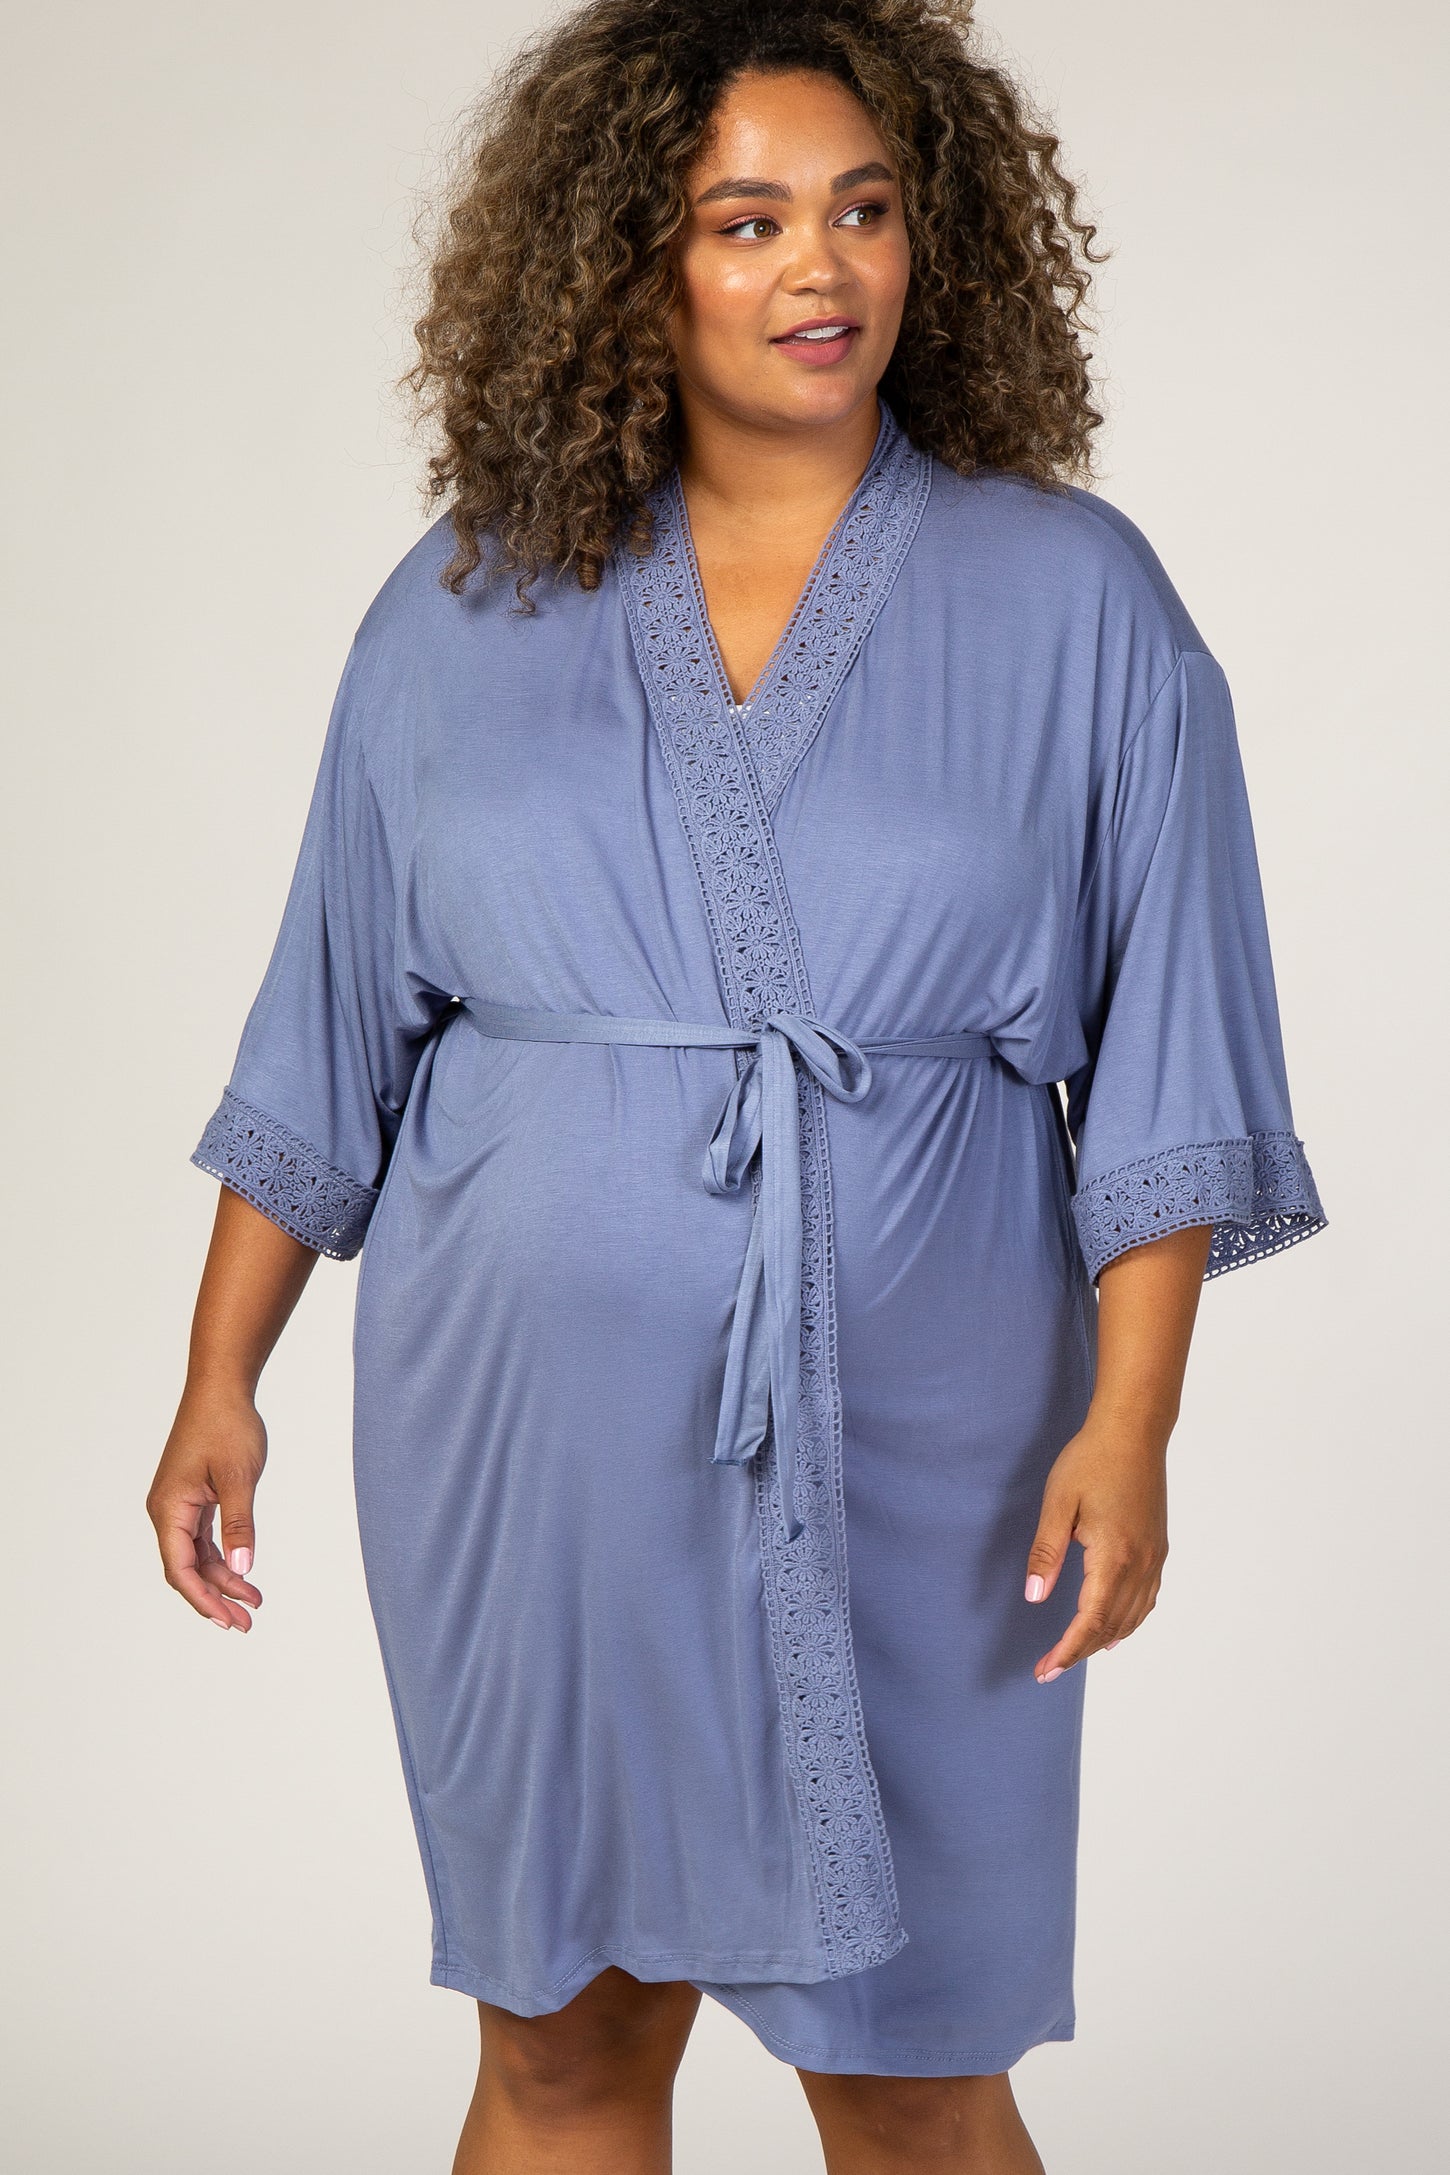 PinkBlush Blue Crochet Trim Plus Delivery/Nursing Maternity Robe